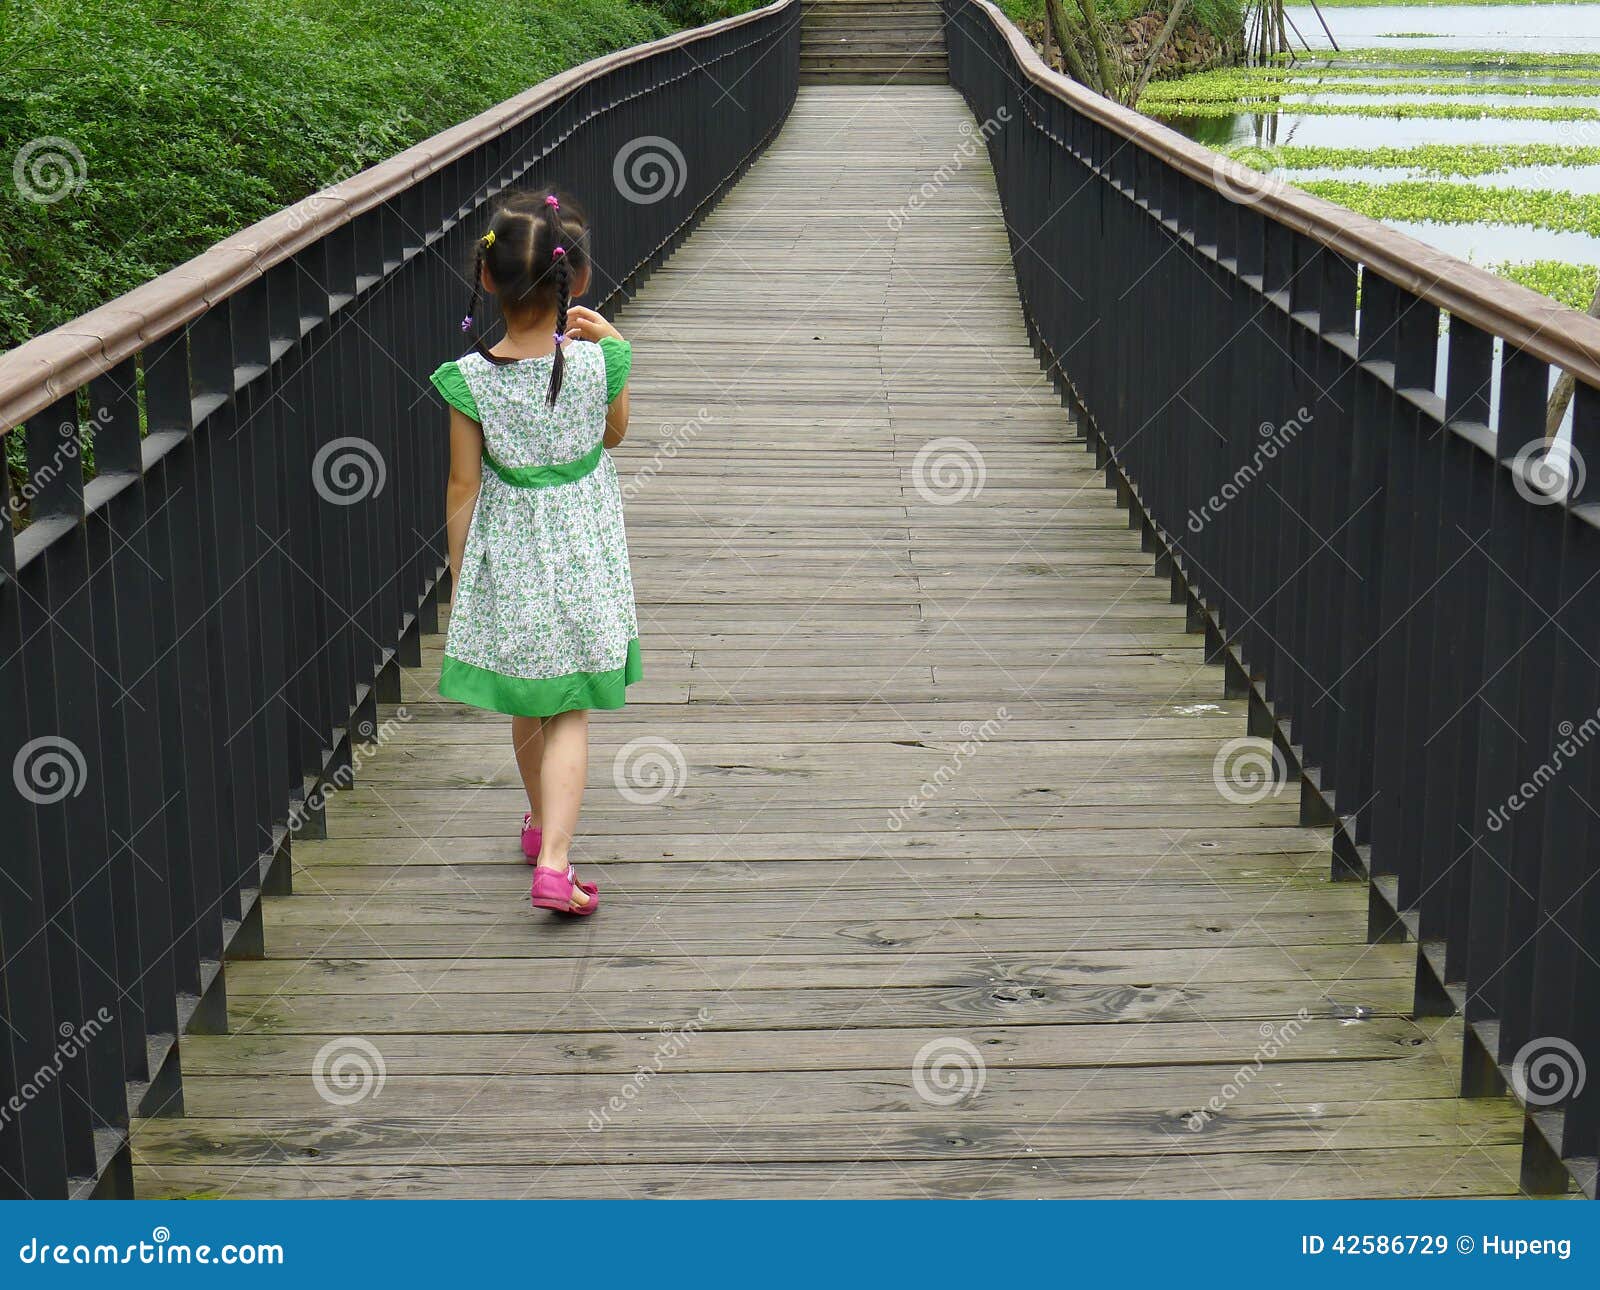 girl walking on the wooden footbridge